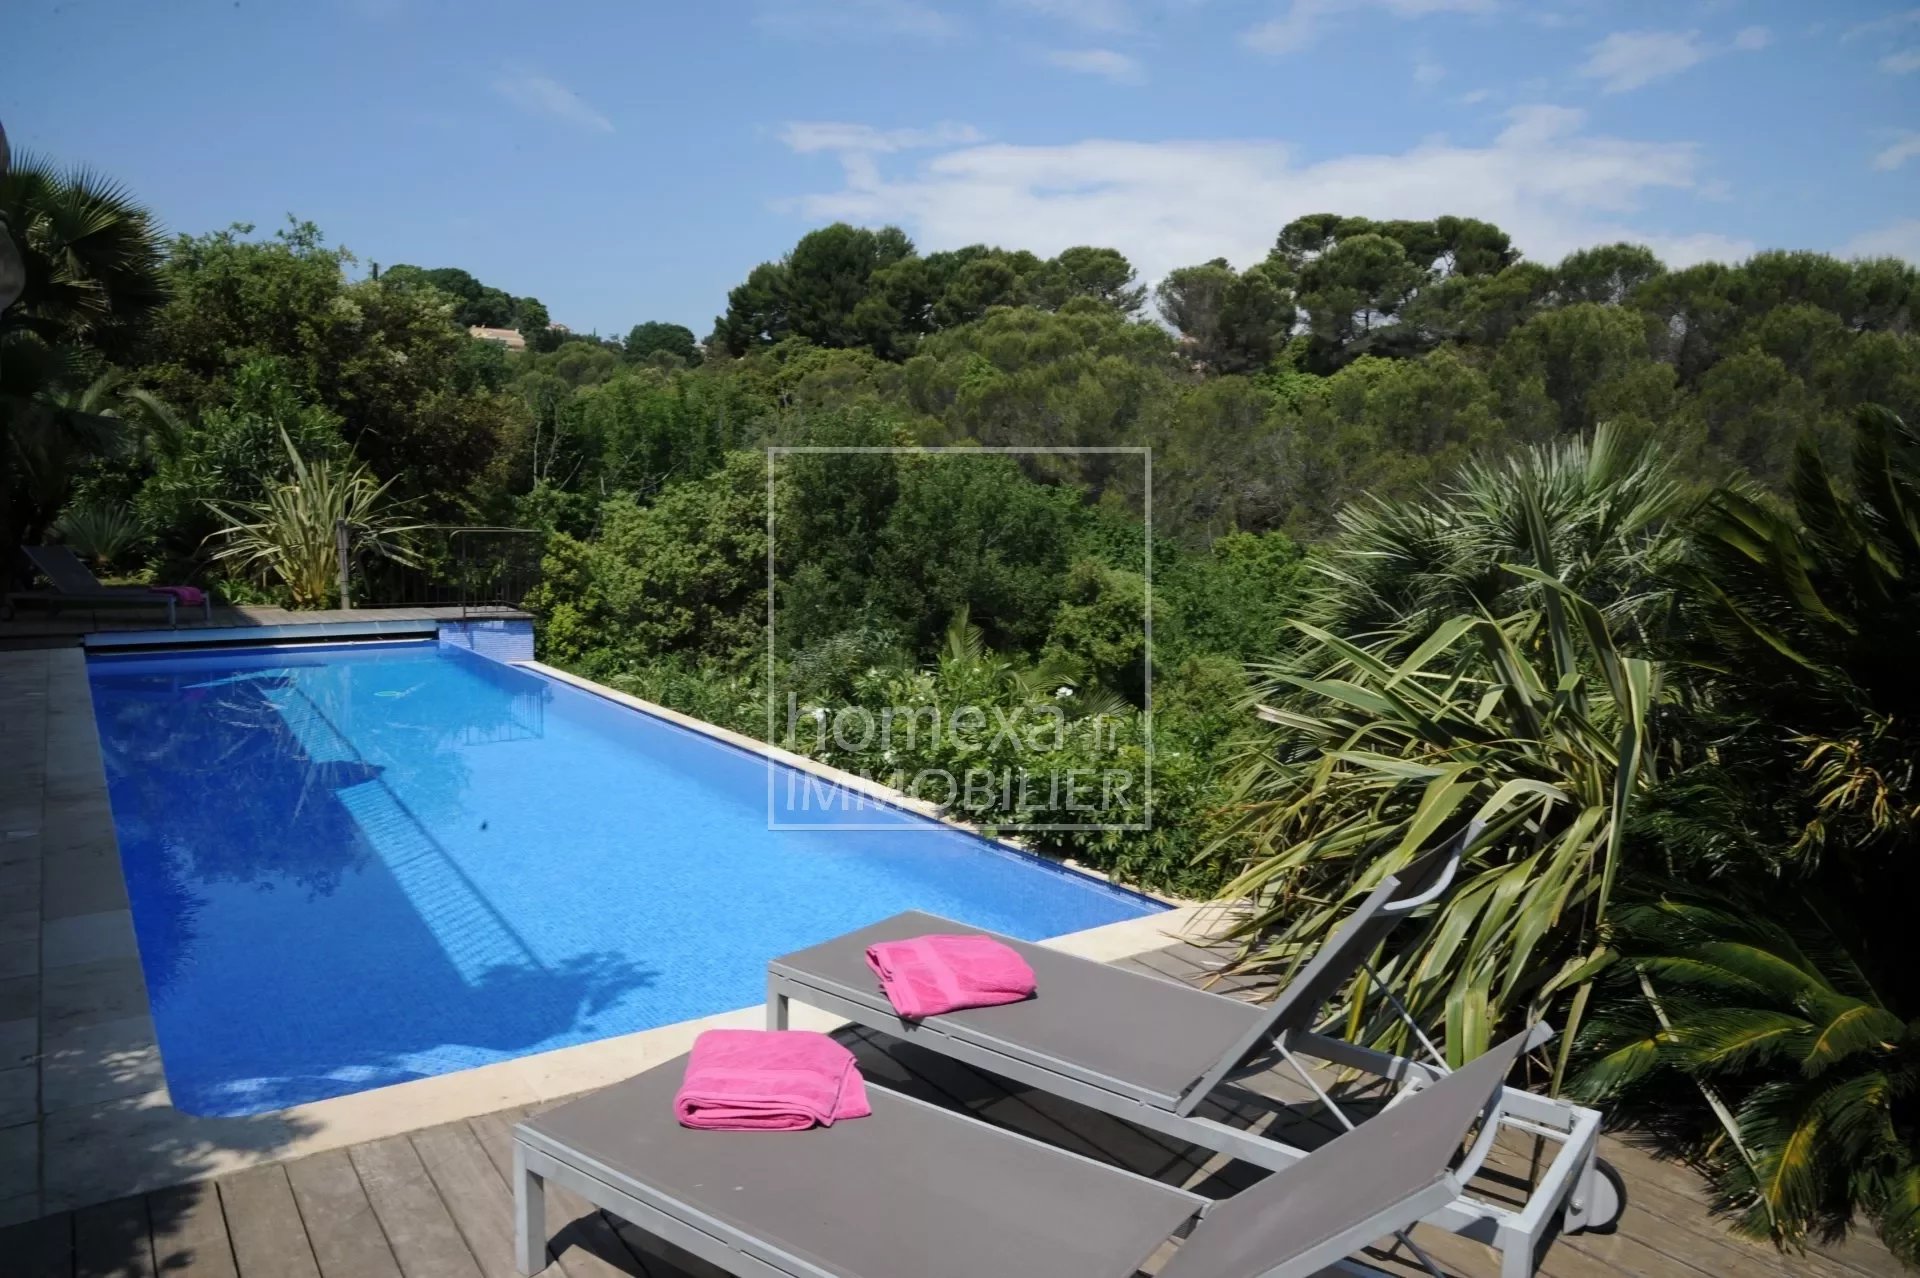 Location villa avec piscine Antibes